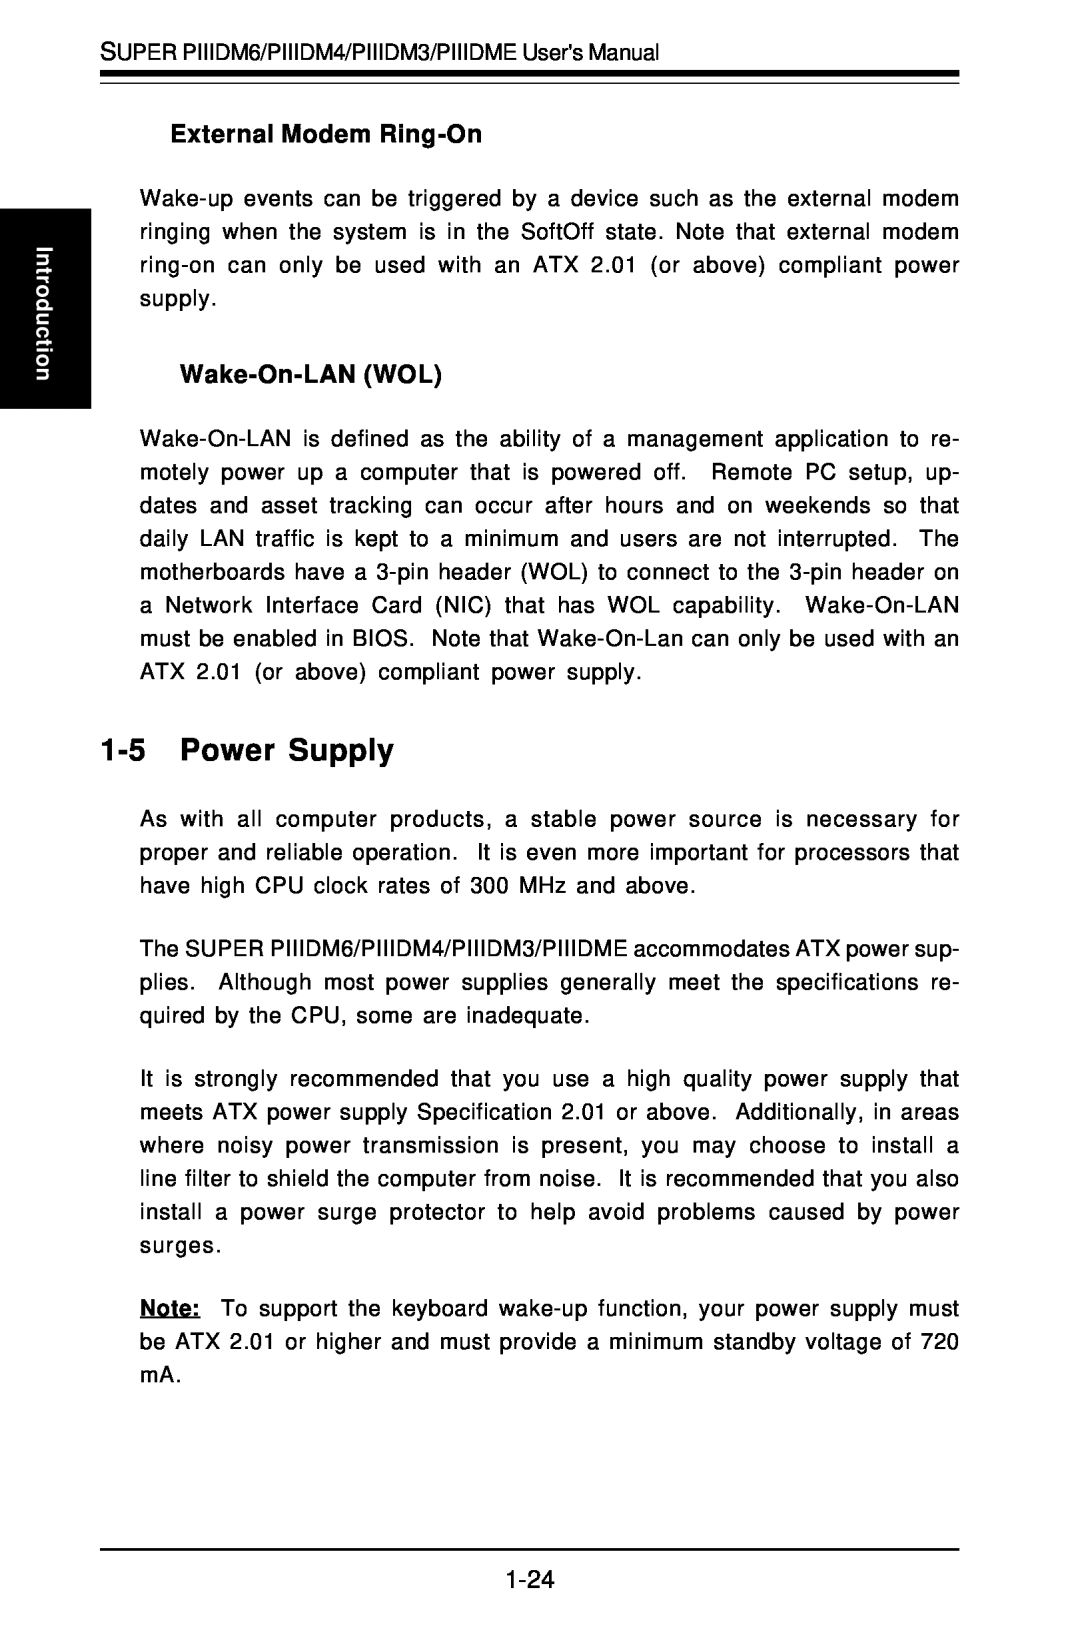 SUPER MICRO Computer Super PIIIDM3, Super PIIIDME Power Supply, External Modem Ring-On, Wake-On-LAN WOL, Introduction 